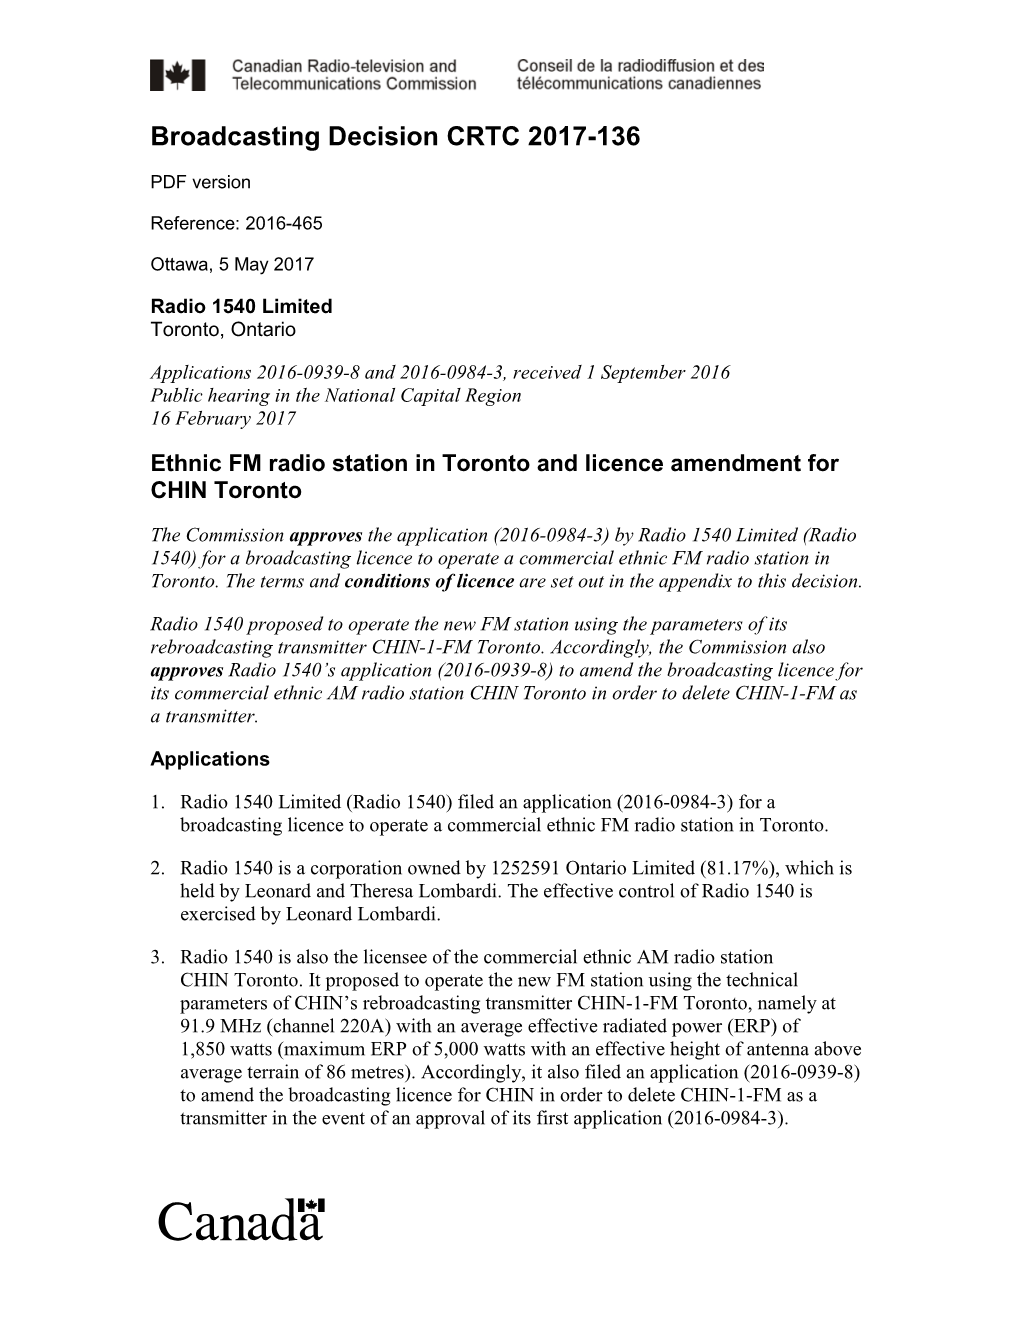 Ethnic FM Radio Station in Toronto and Licence Amendment for CHIN Toronto